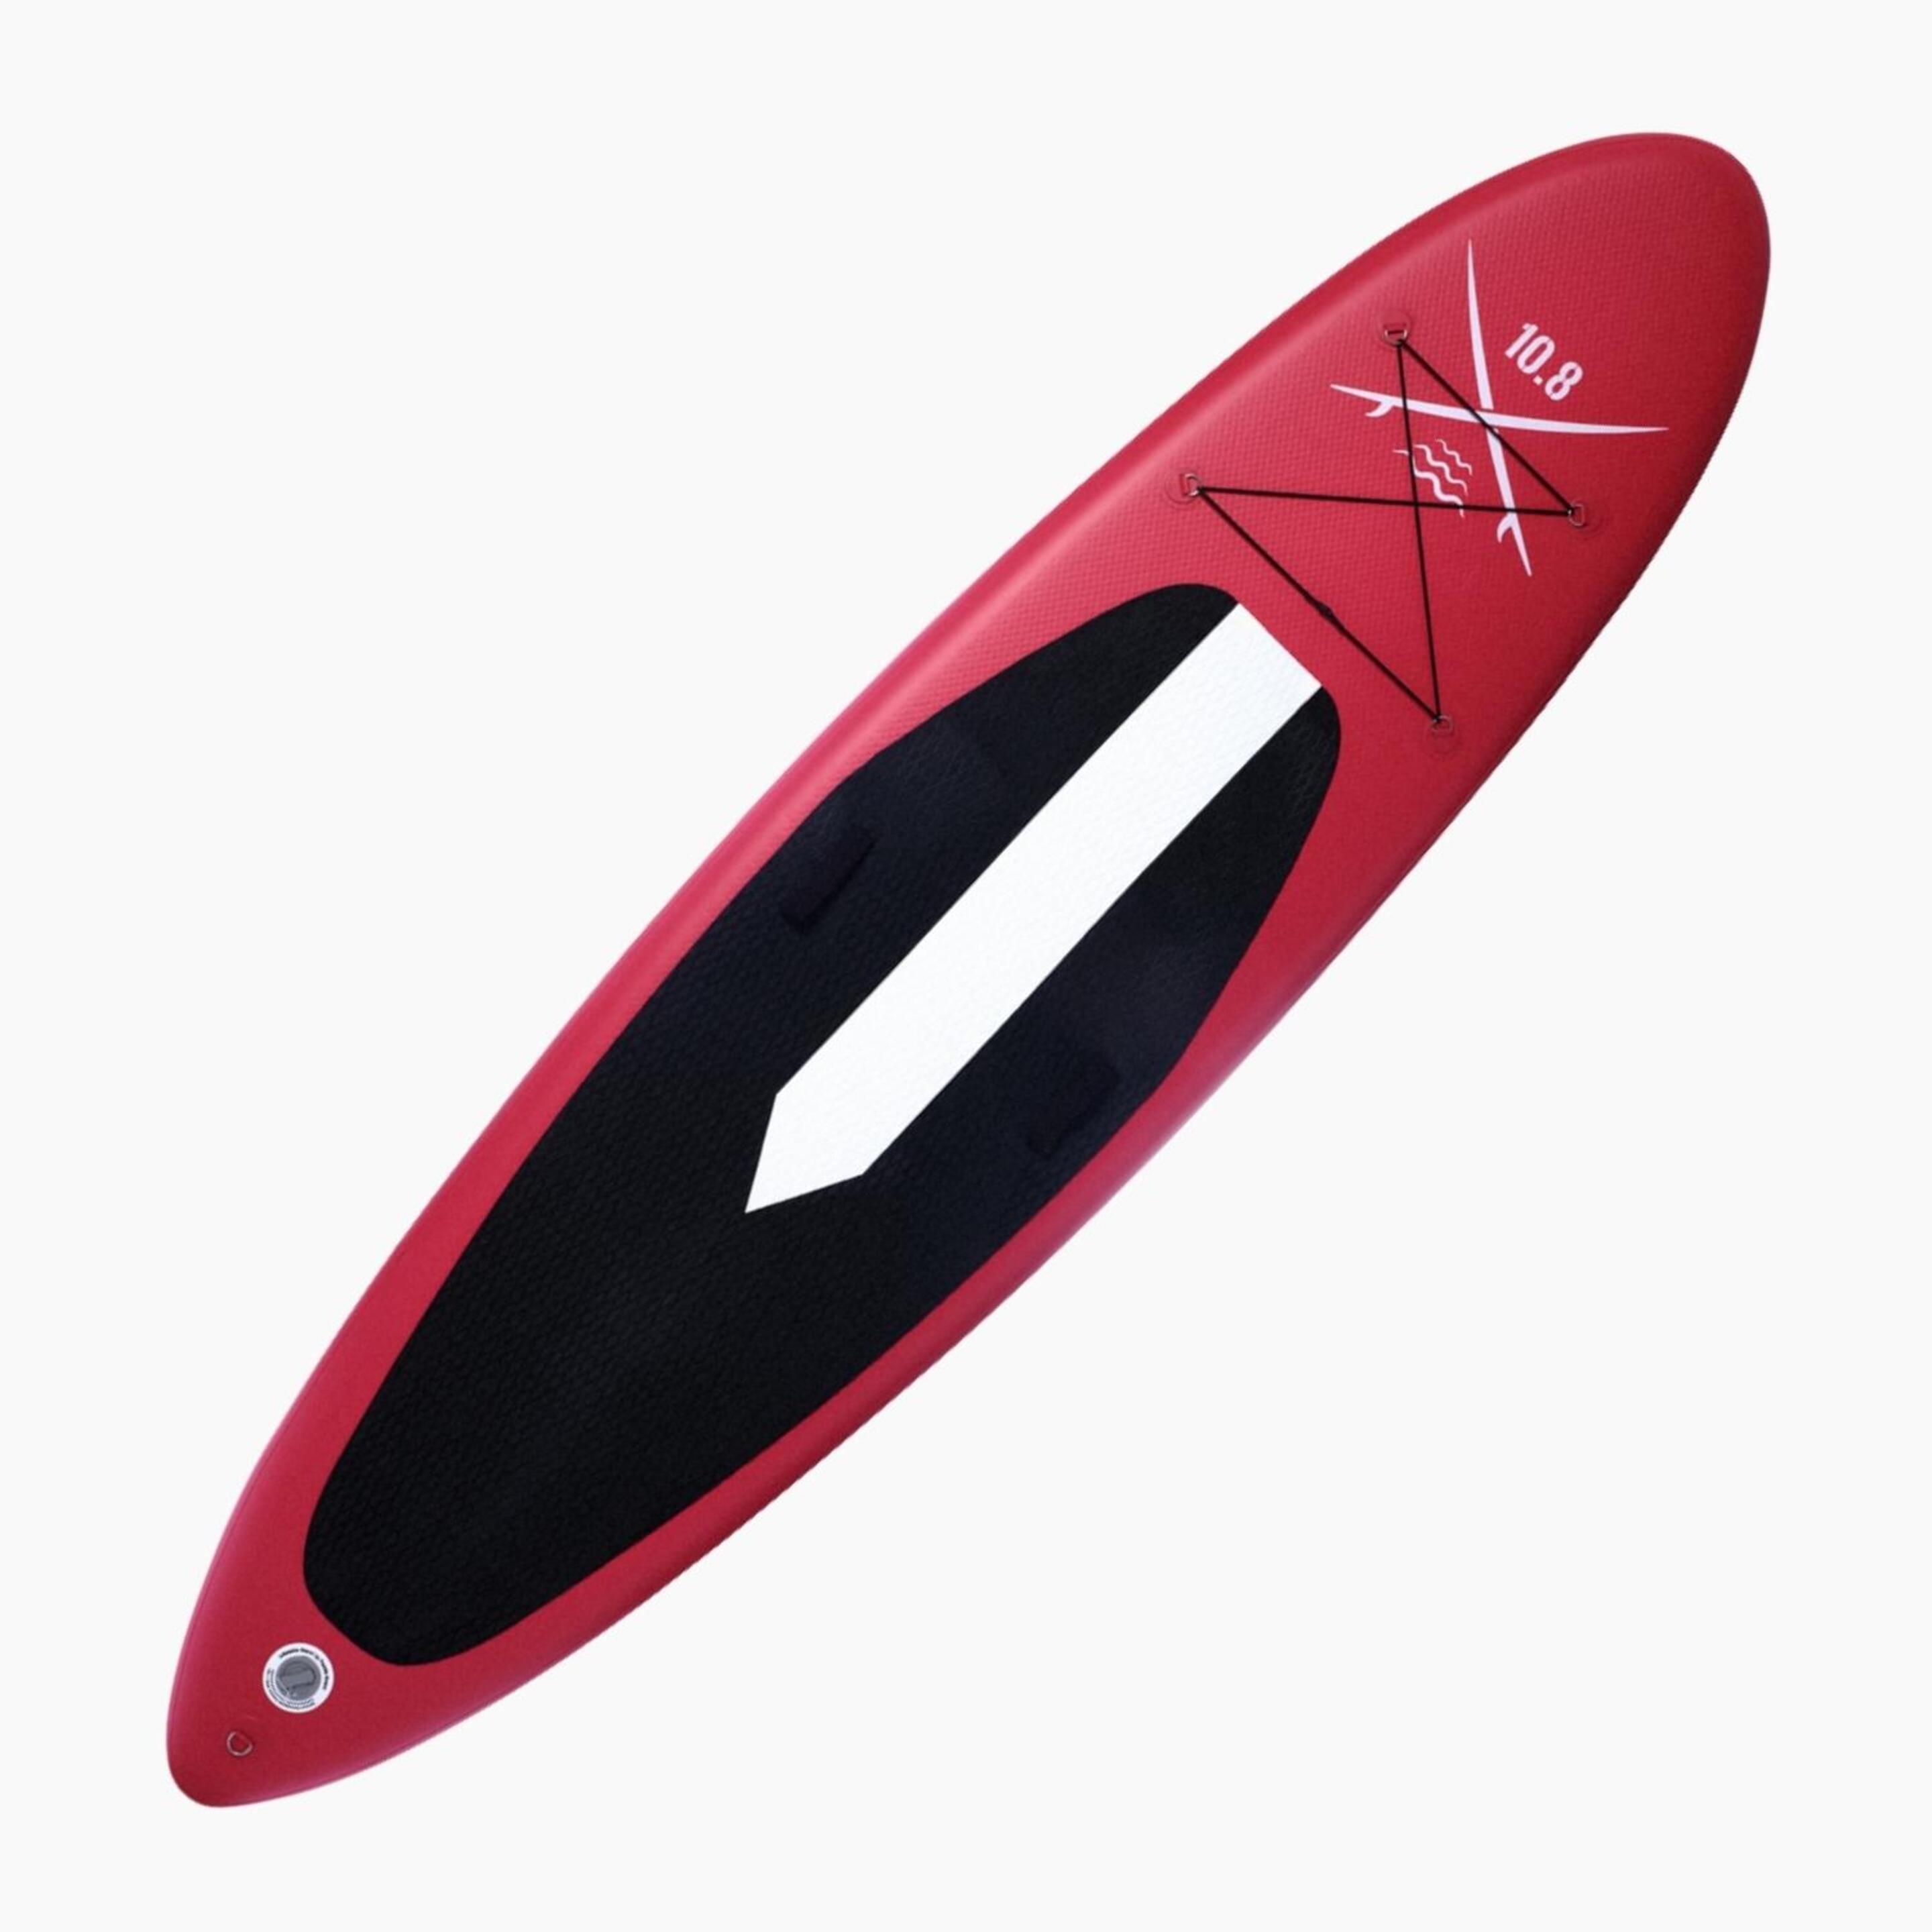 Tabla De Paddle Surf Suprfit Hinchable Set Lailani - Rojo - Tabla De Paddle Surf Hinchable  MKP